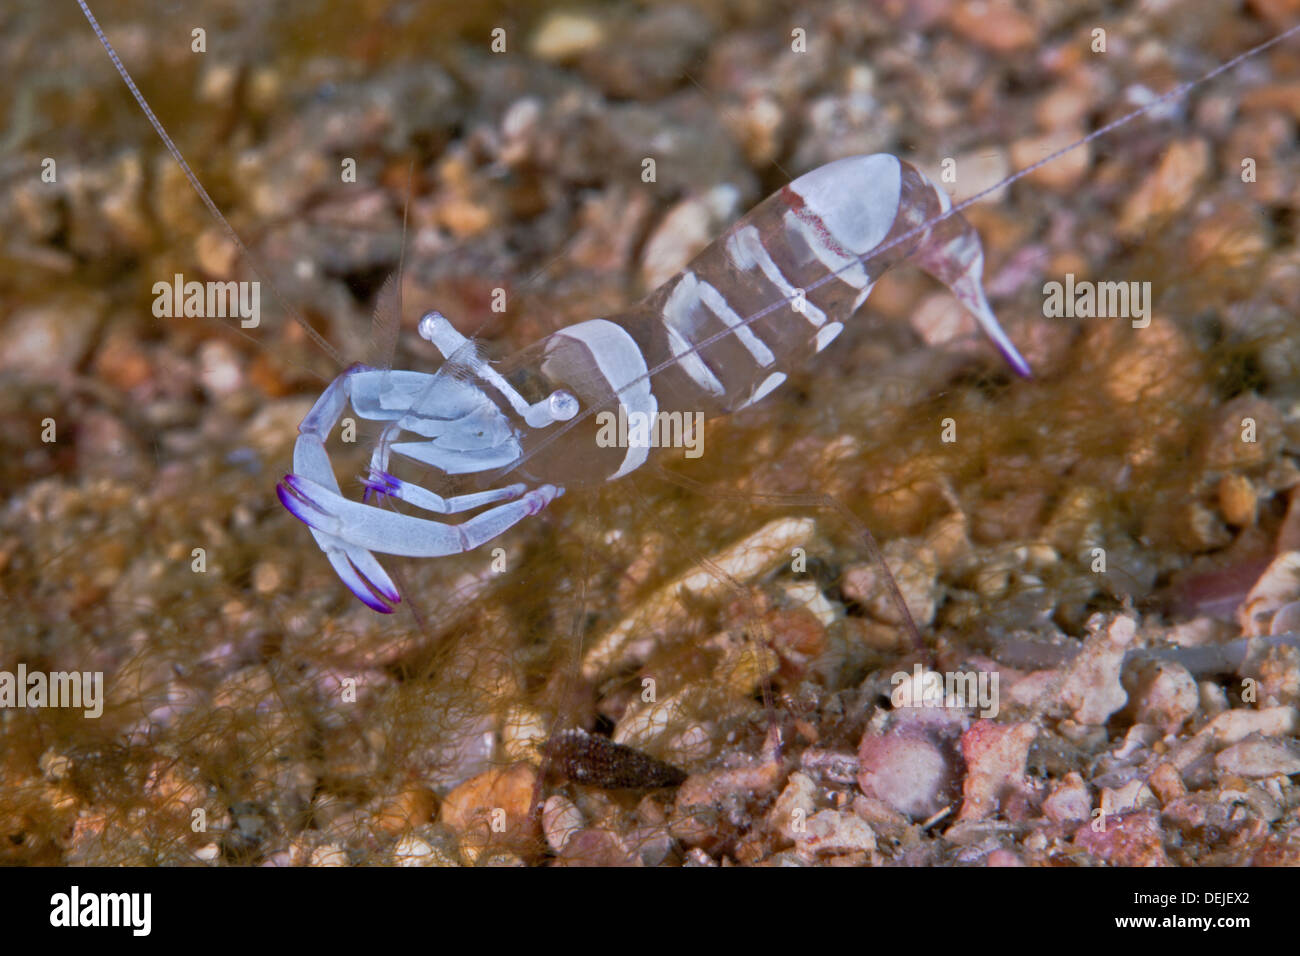 Magnificent anemone shrimp, Periclimenes magnificus). Stock Photo